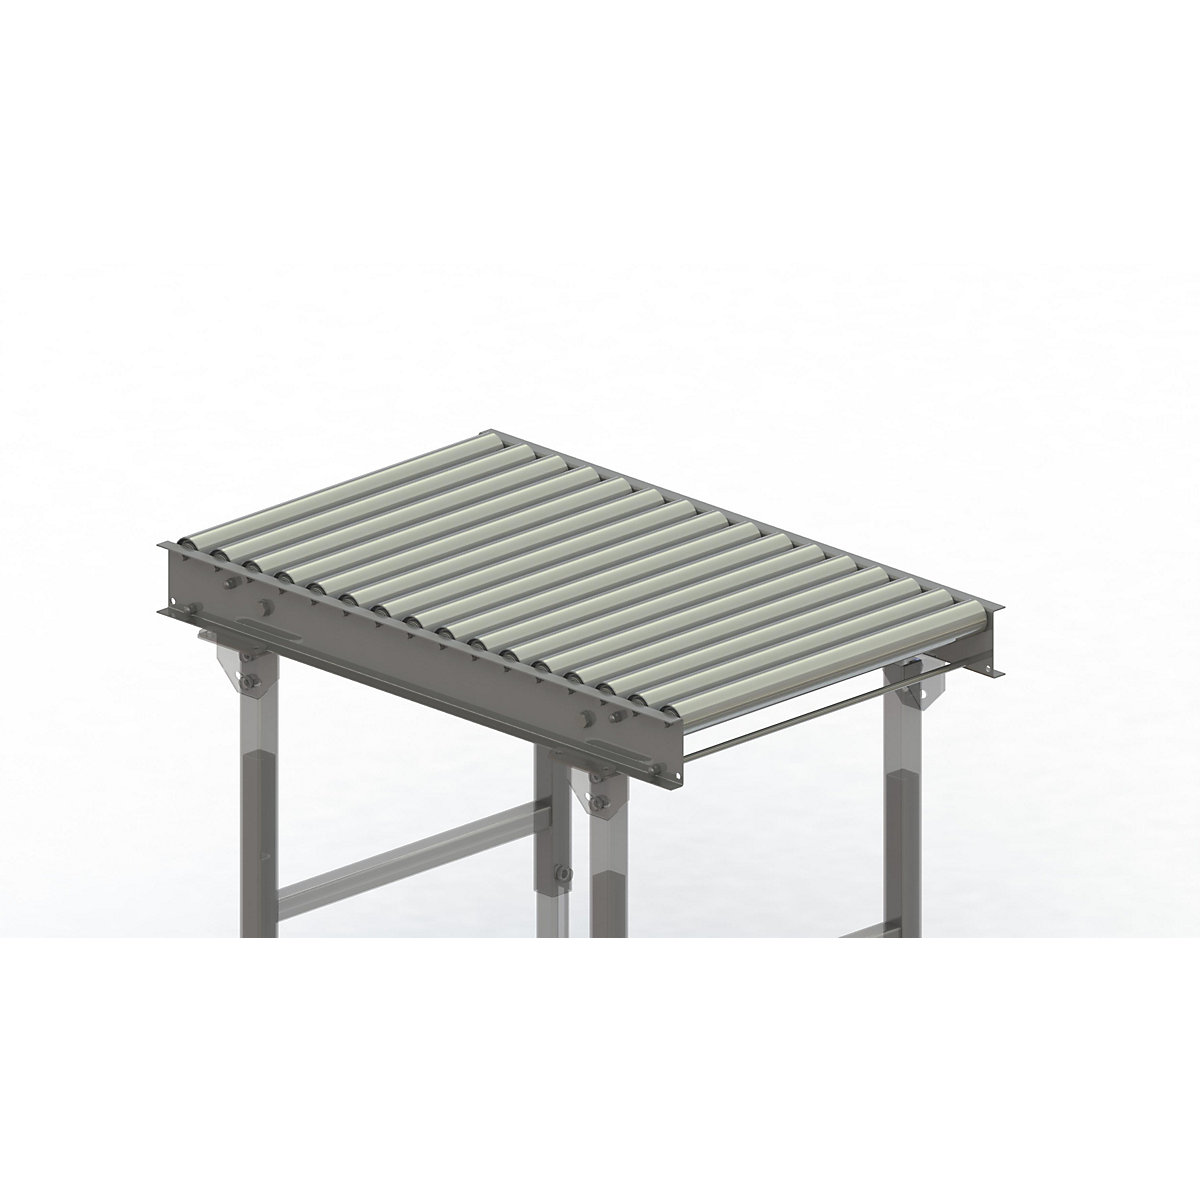 Gura – Roller conveyor, steel frame with zinc plated steel rollers, track width 600 mm, distance between axles 62.5 mm, length 1 m